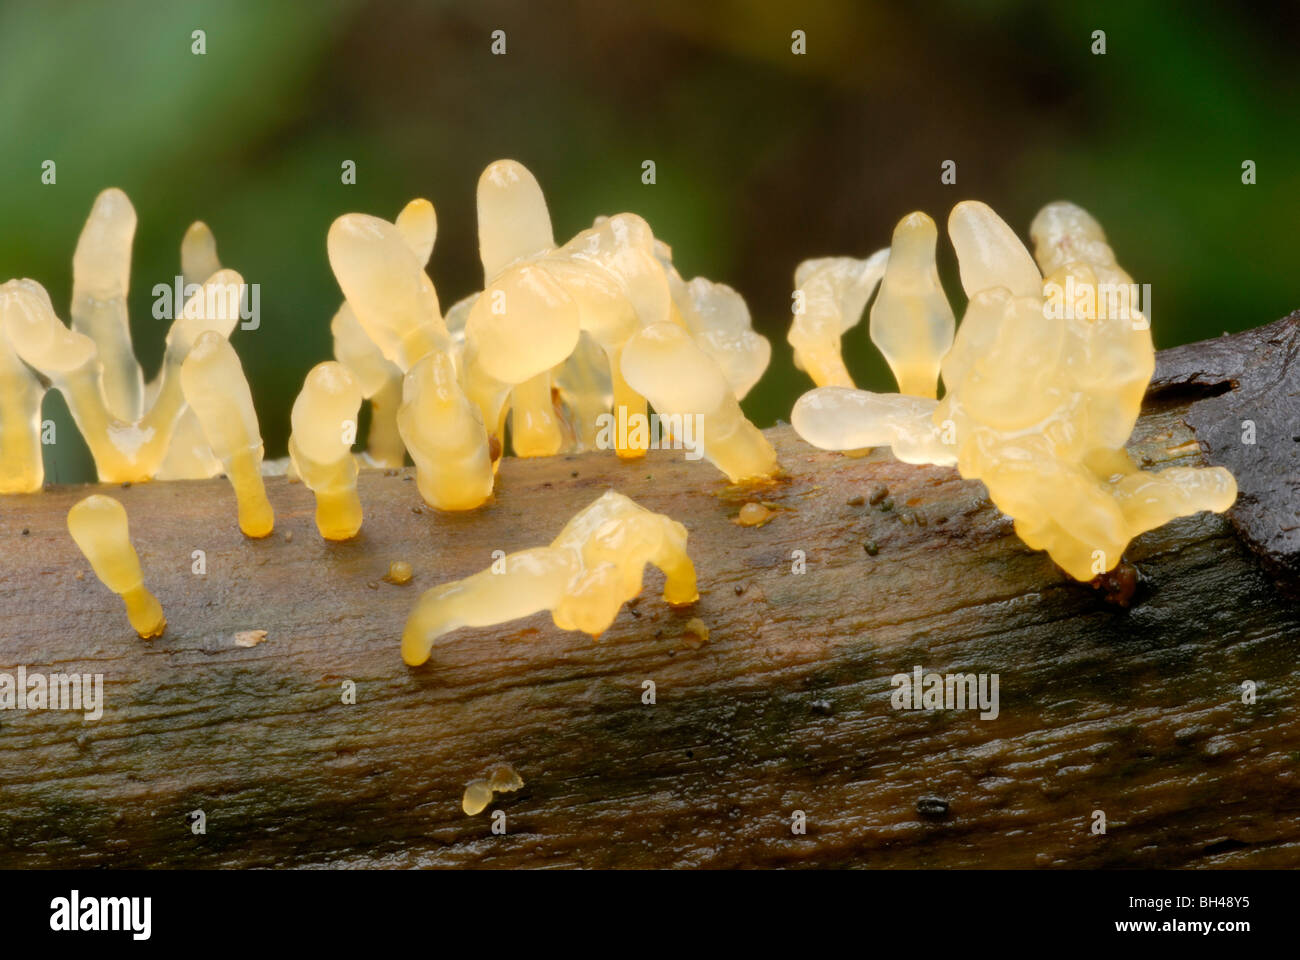 Jelly fungus (Calocera cornea). Growing on rotting tree branch in woodland. Stock Photo